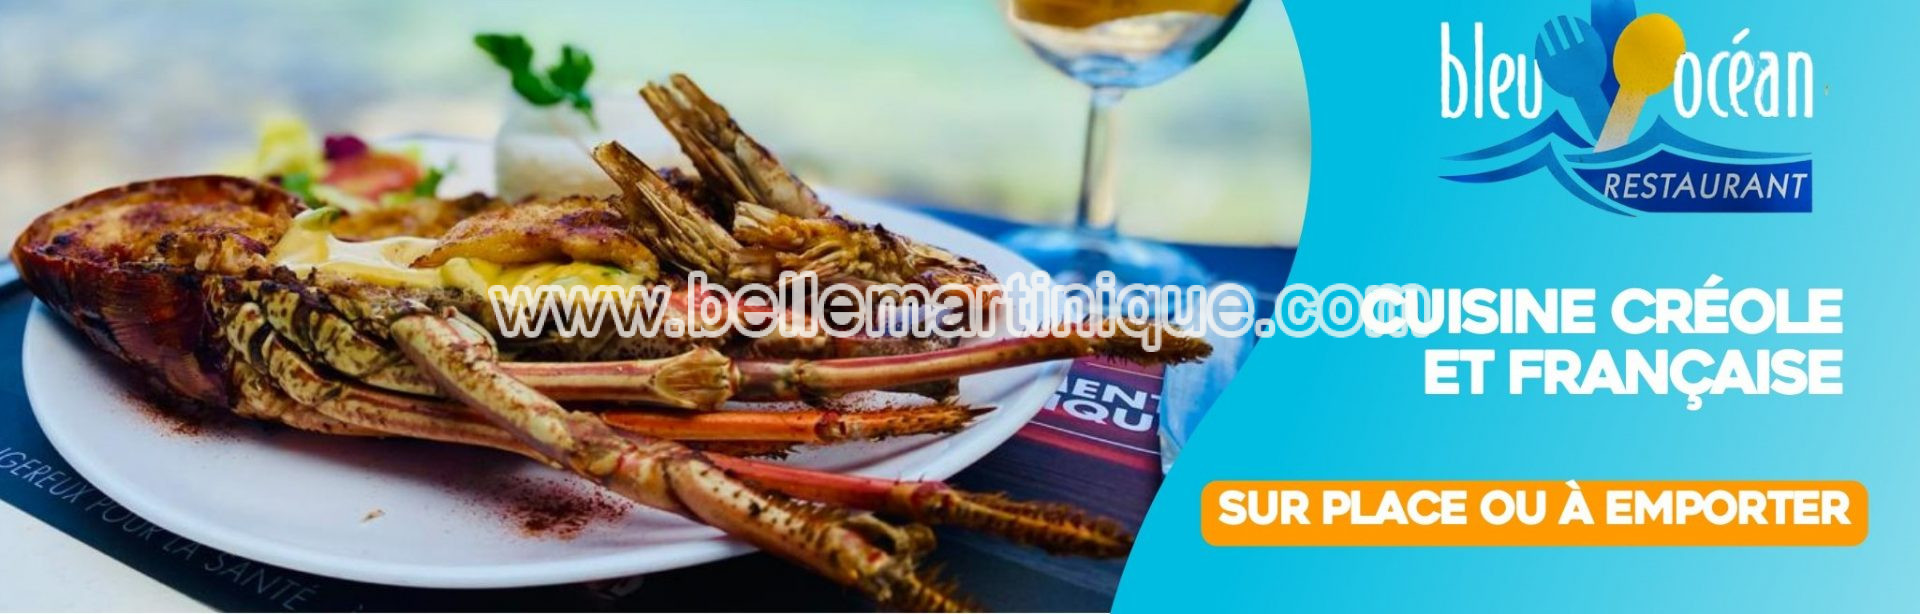 Restaurant Bleu Ocean - cosmy - plage - trinite - martinique - antilles - caraibes 1